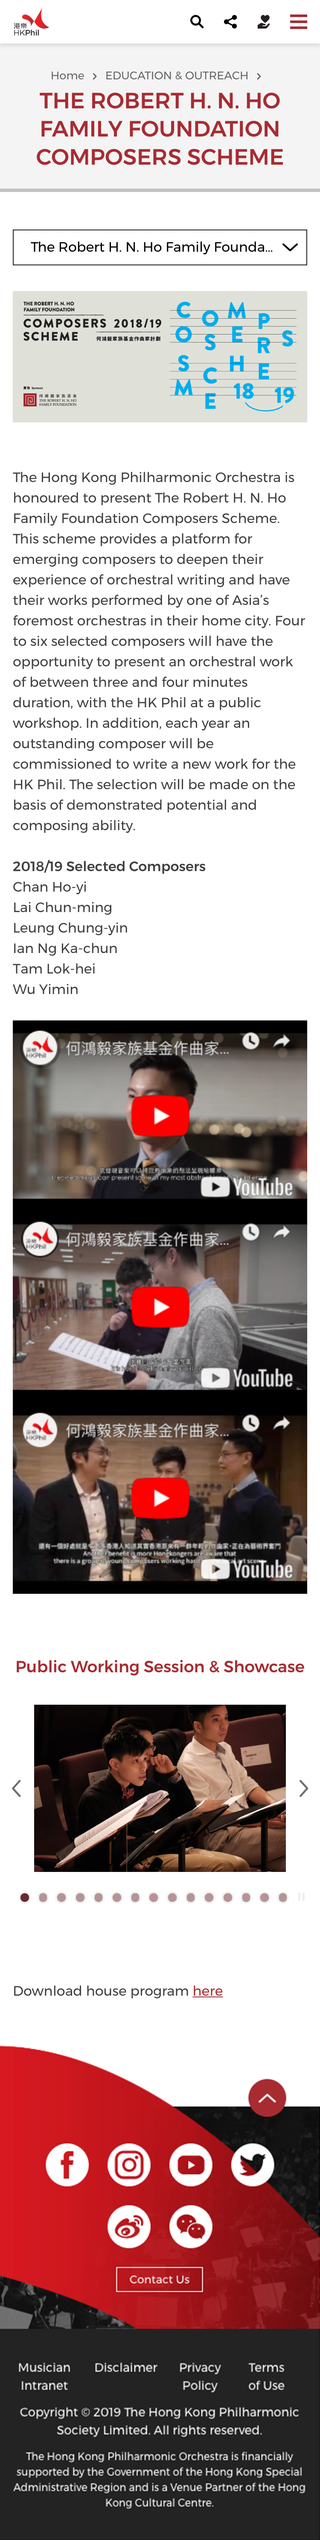 Hong Kong Philharmonic  website screenshot for mobile version 4 of 6